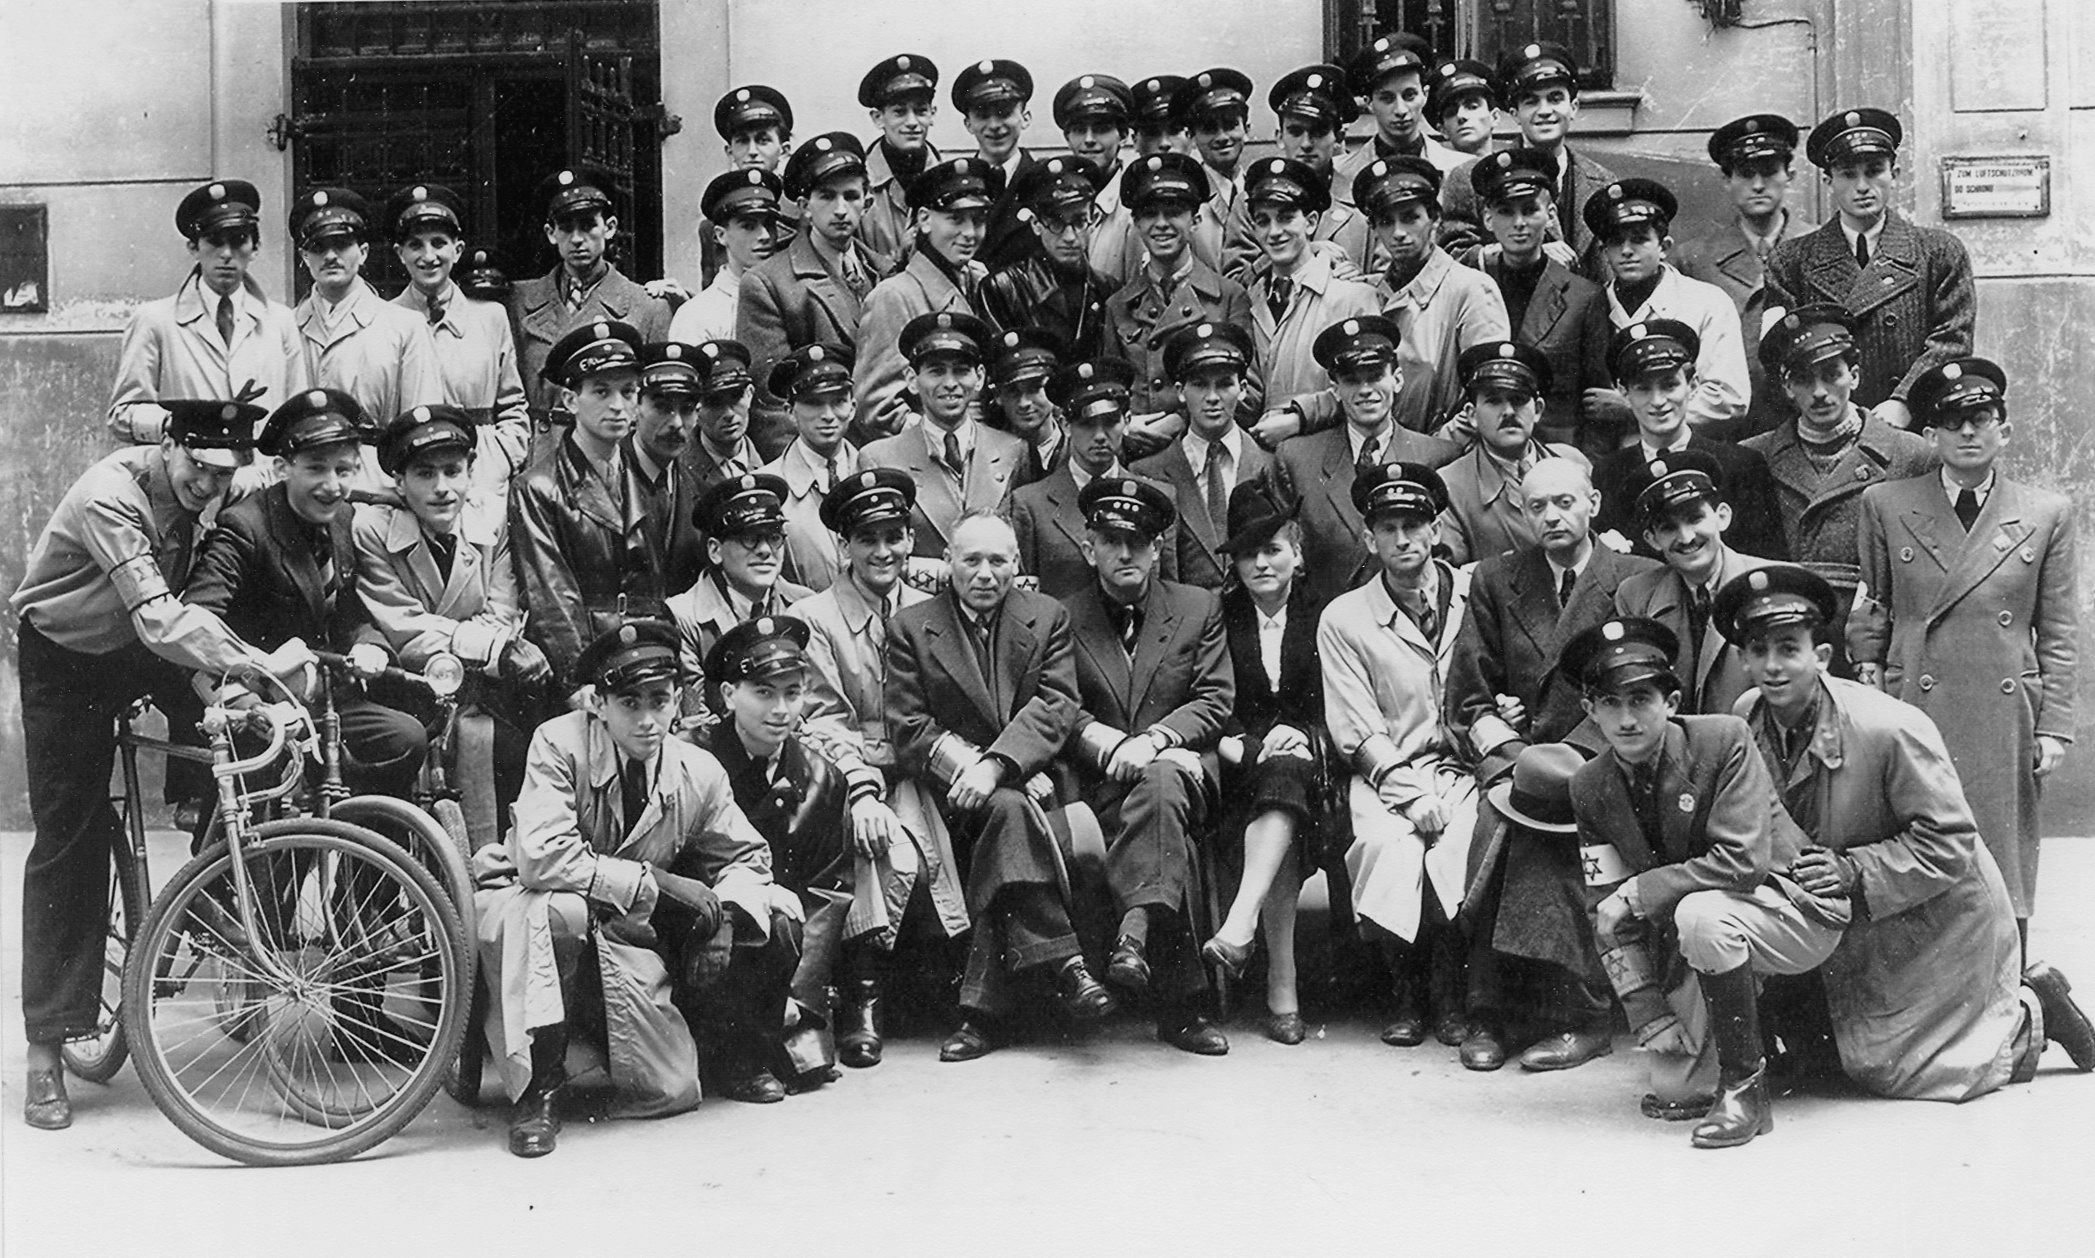 Group photo of the Warsaw Ghetto Jewish police, WW2 era, [2095x1258 ...